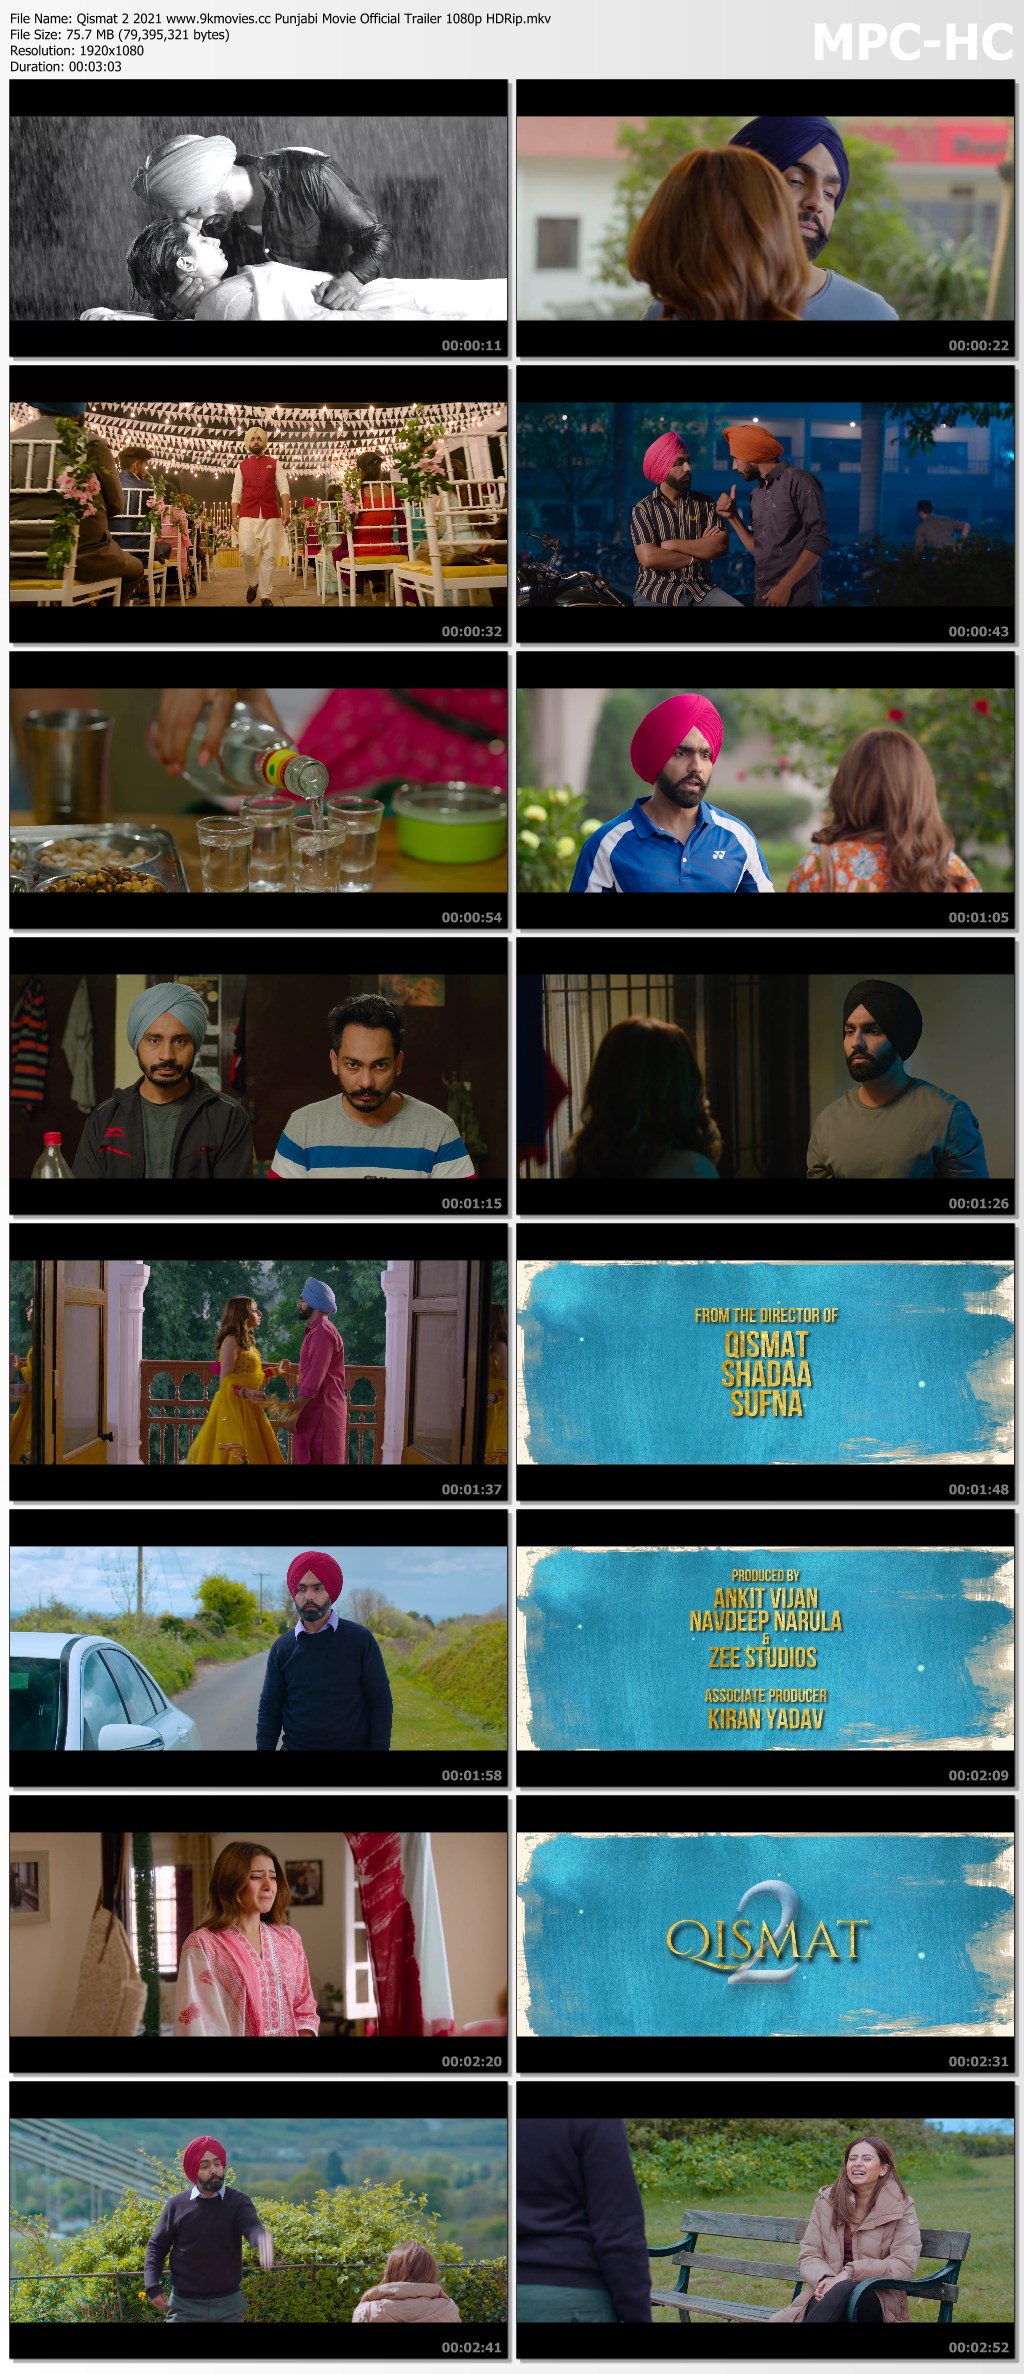 Qismat 2 2021 www.9kmovies.cc Punjabi Movie Official Trailer 1080p HDRip.mkv thumbsc121ff3a04820551